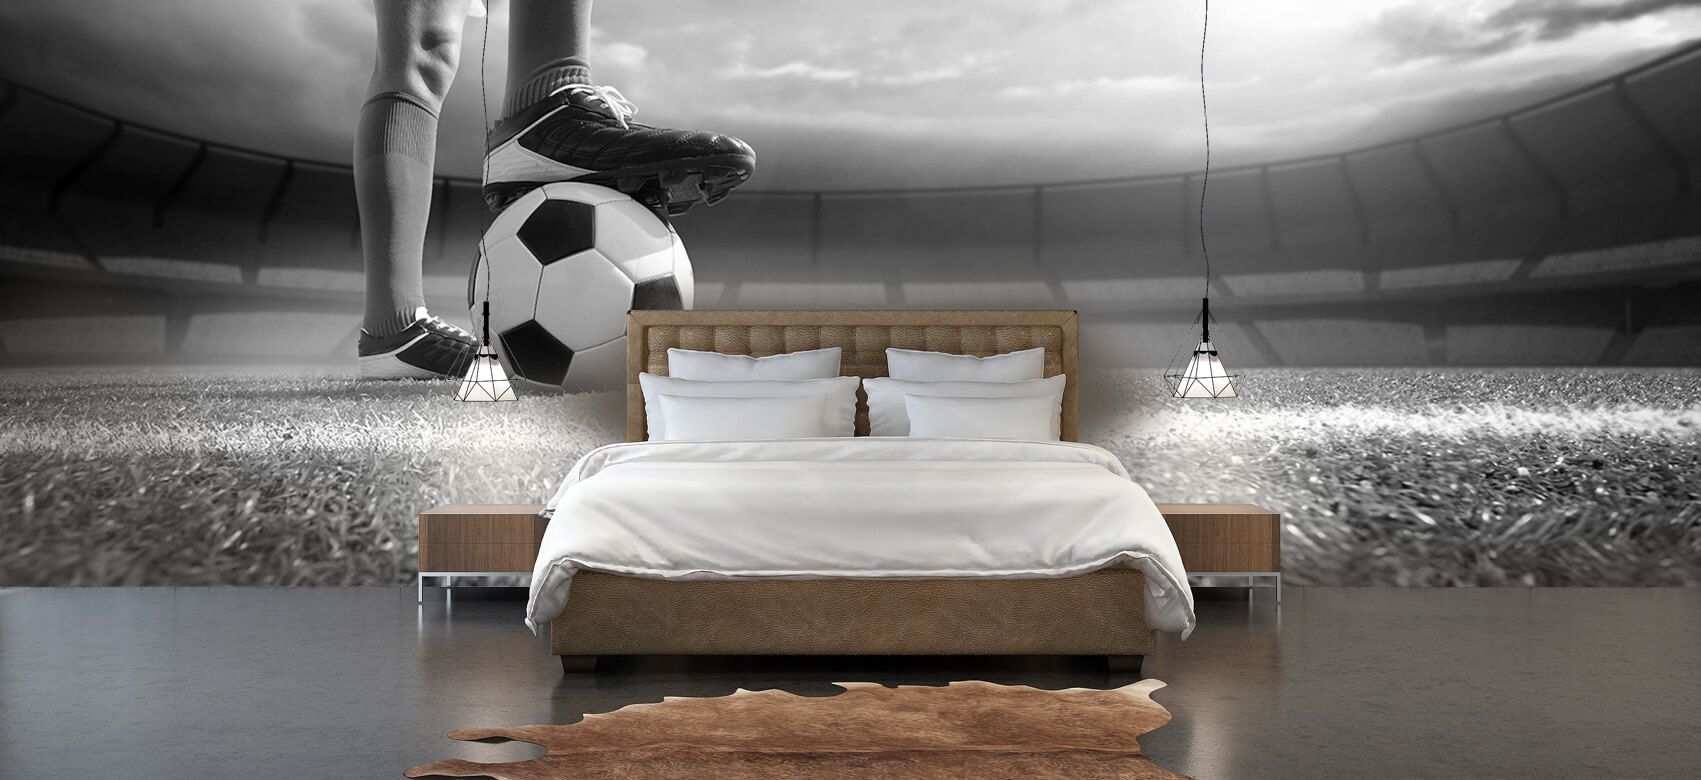 Soccer - papier peint panoramique tendance - Photowall